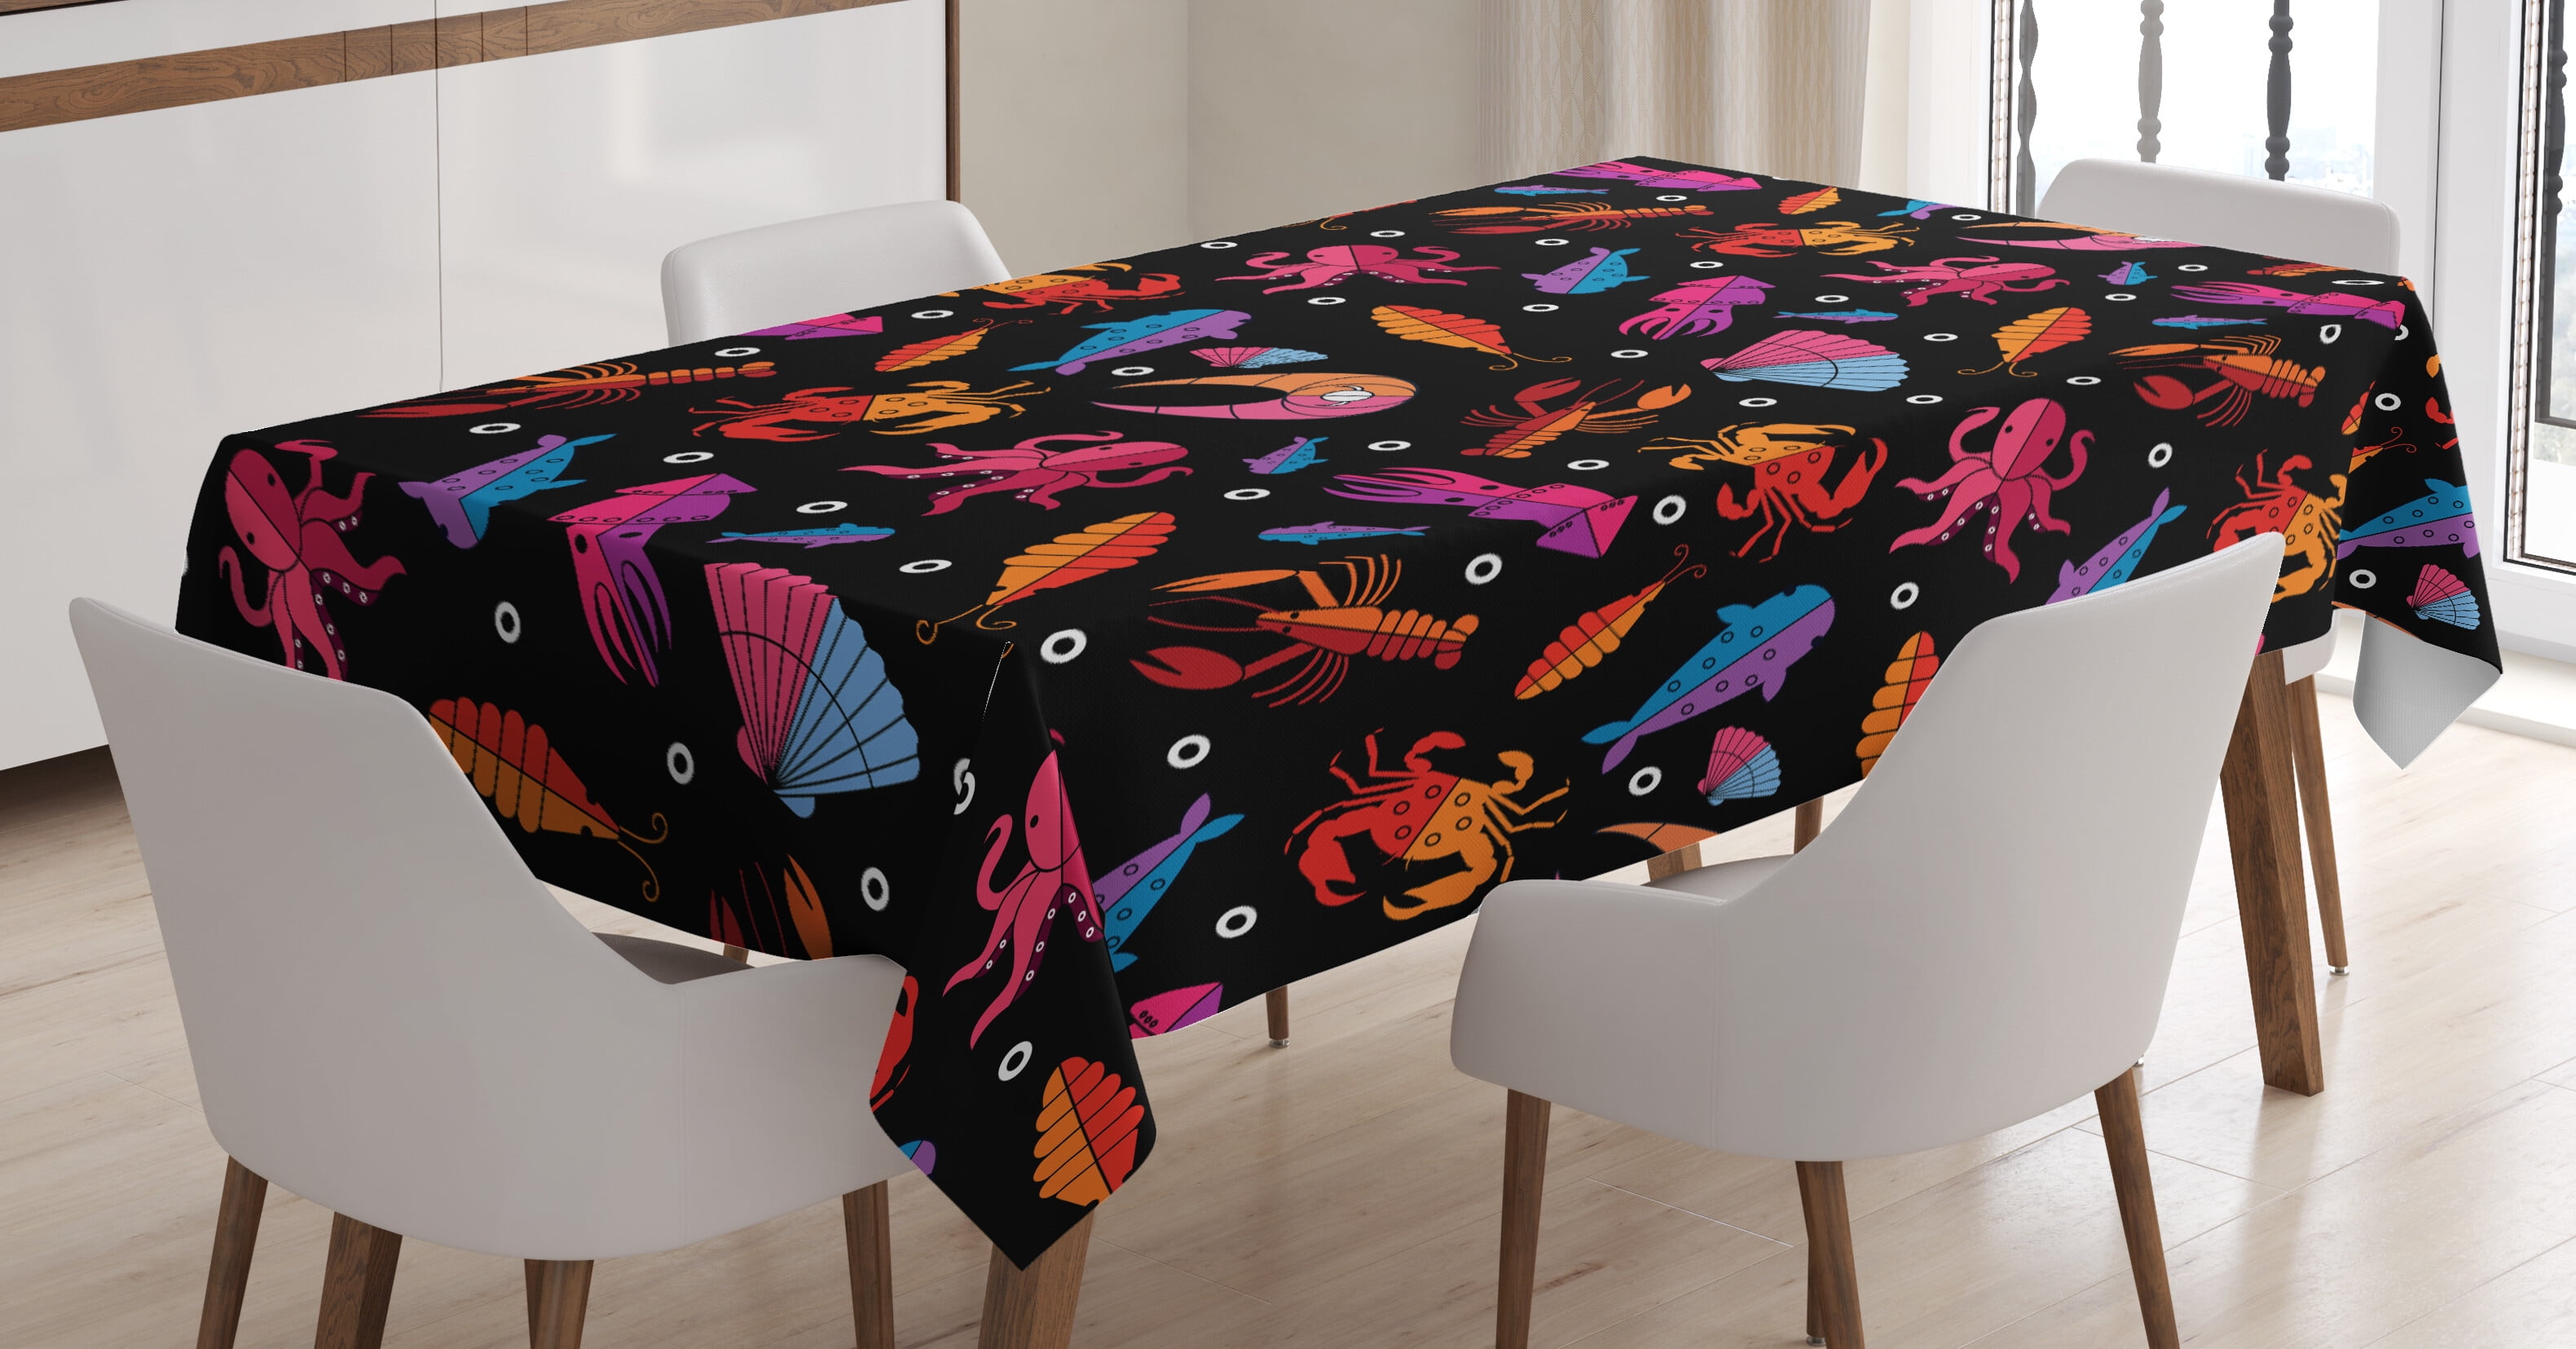  Manfei Fish Tablecloths Fishing Theme Table